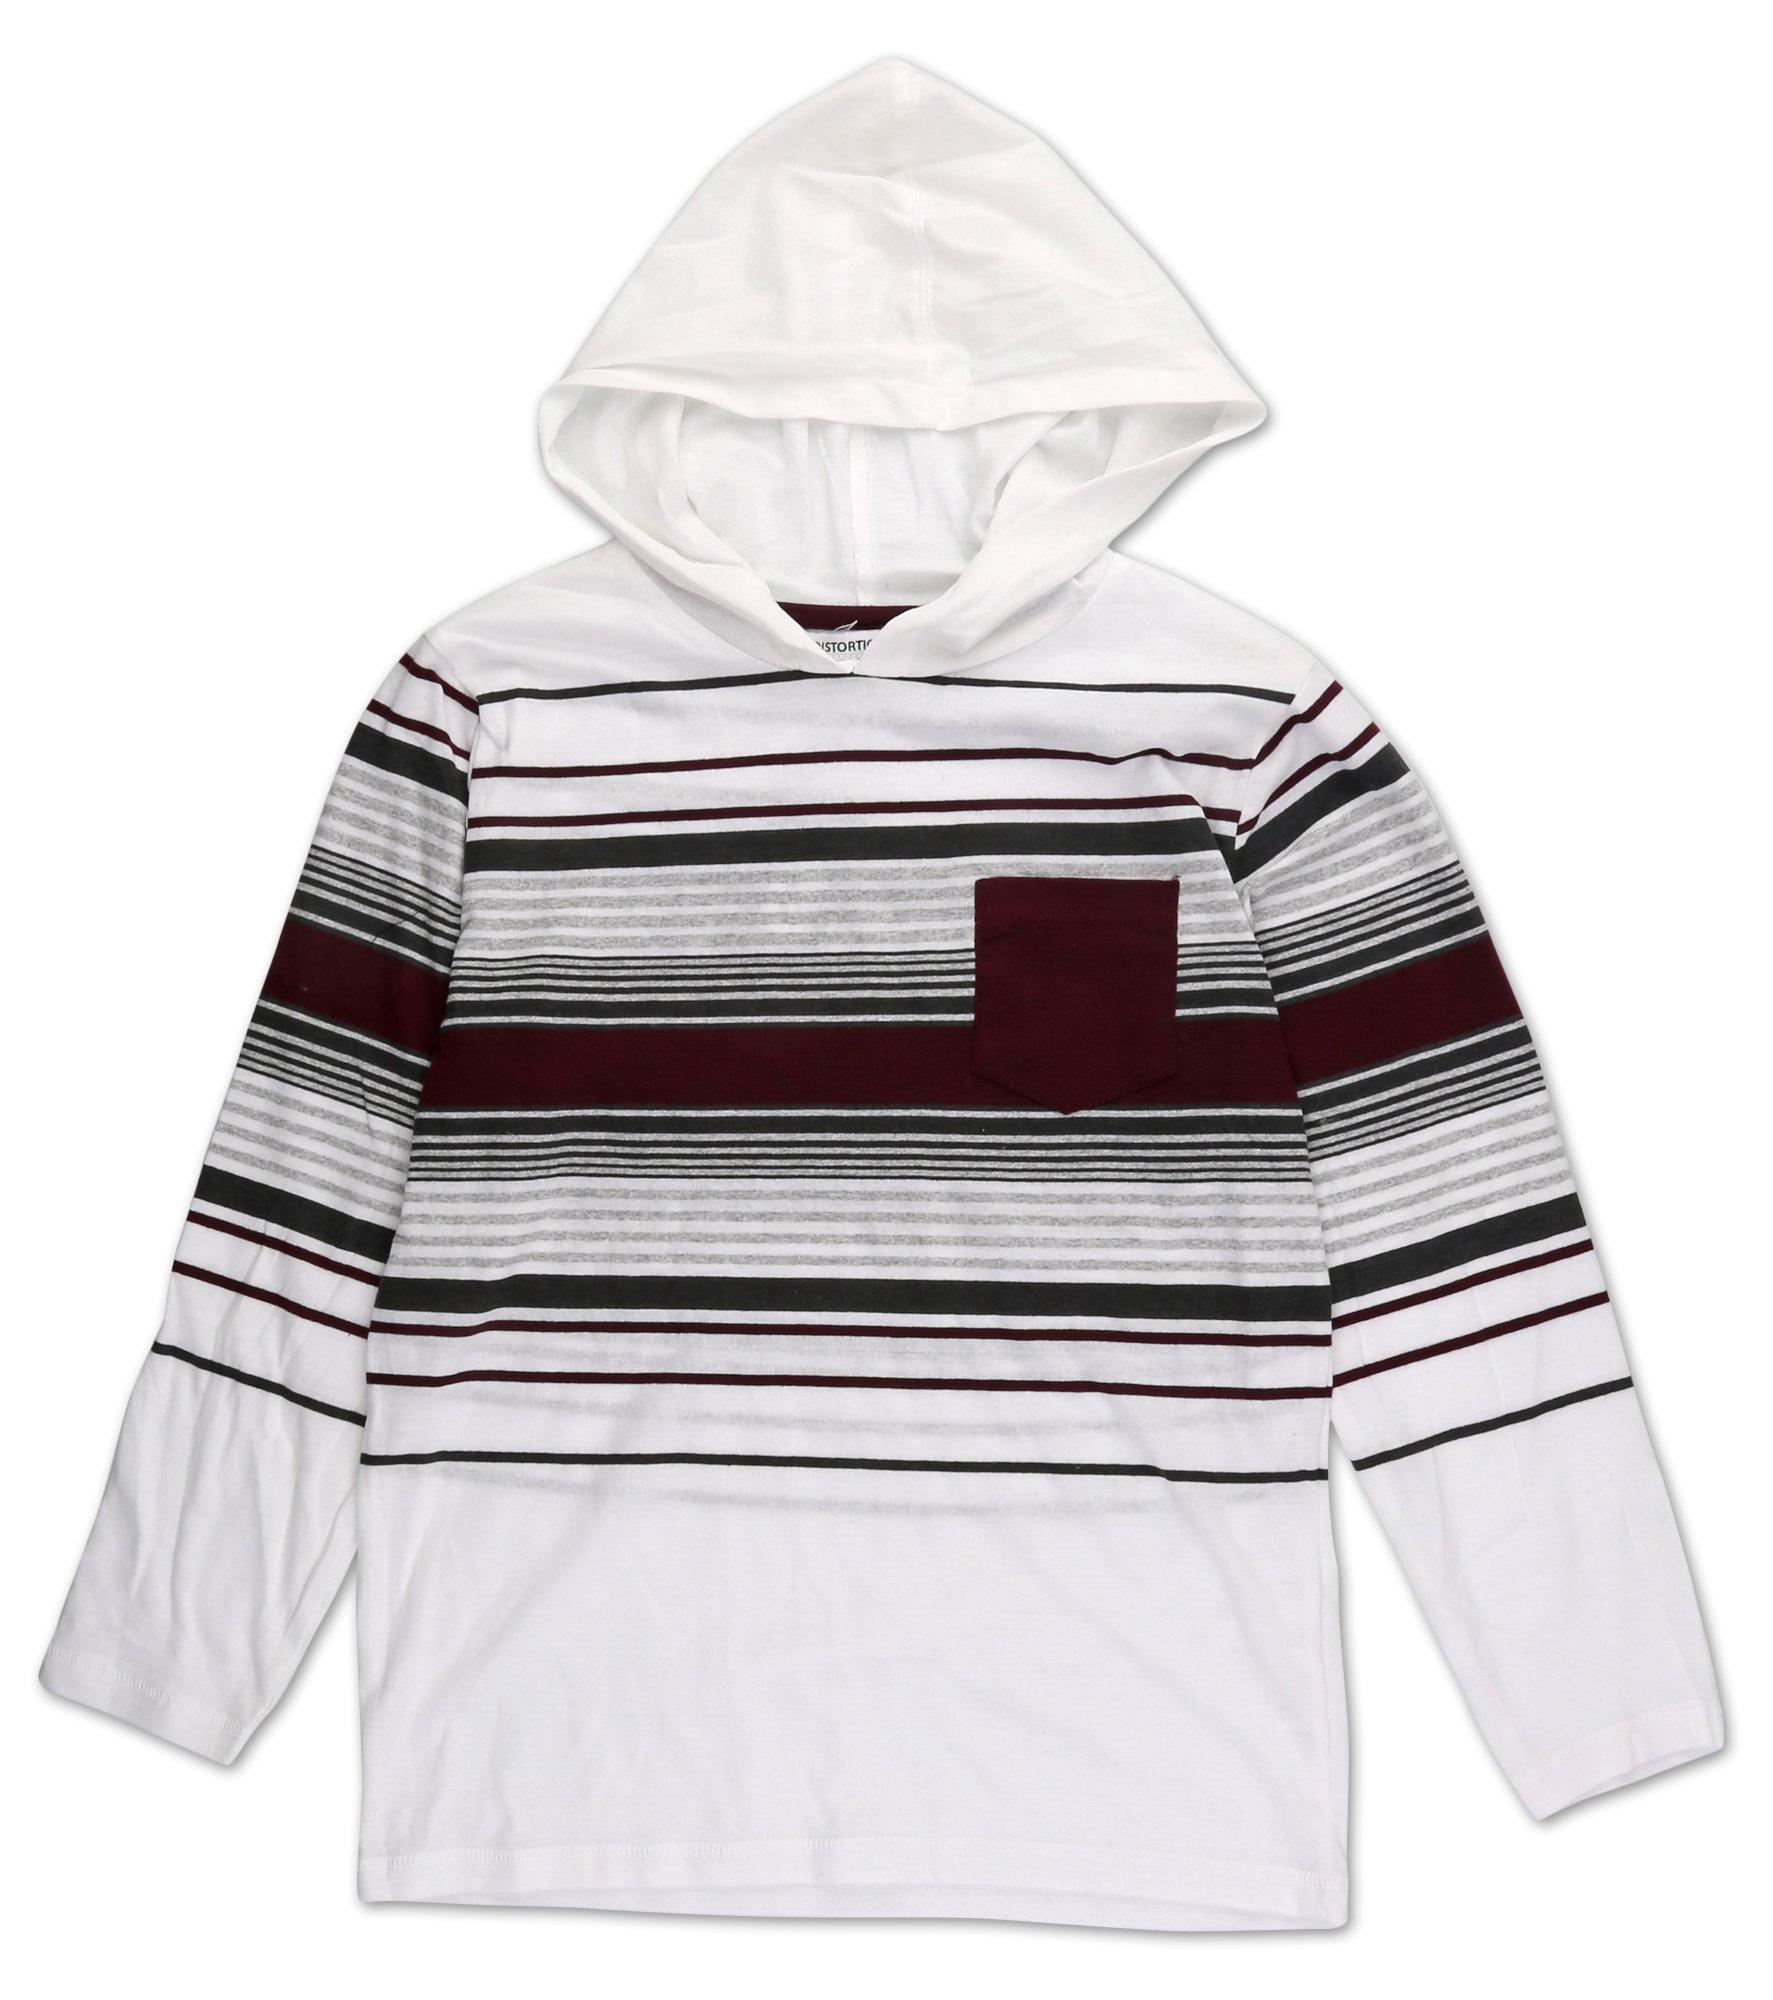 Boys Stripe Print Hooded Shirt